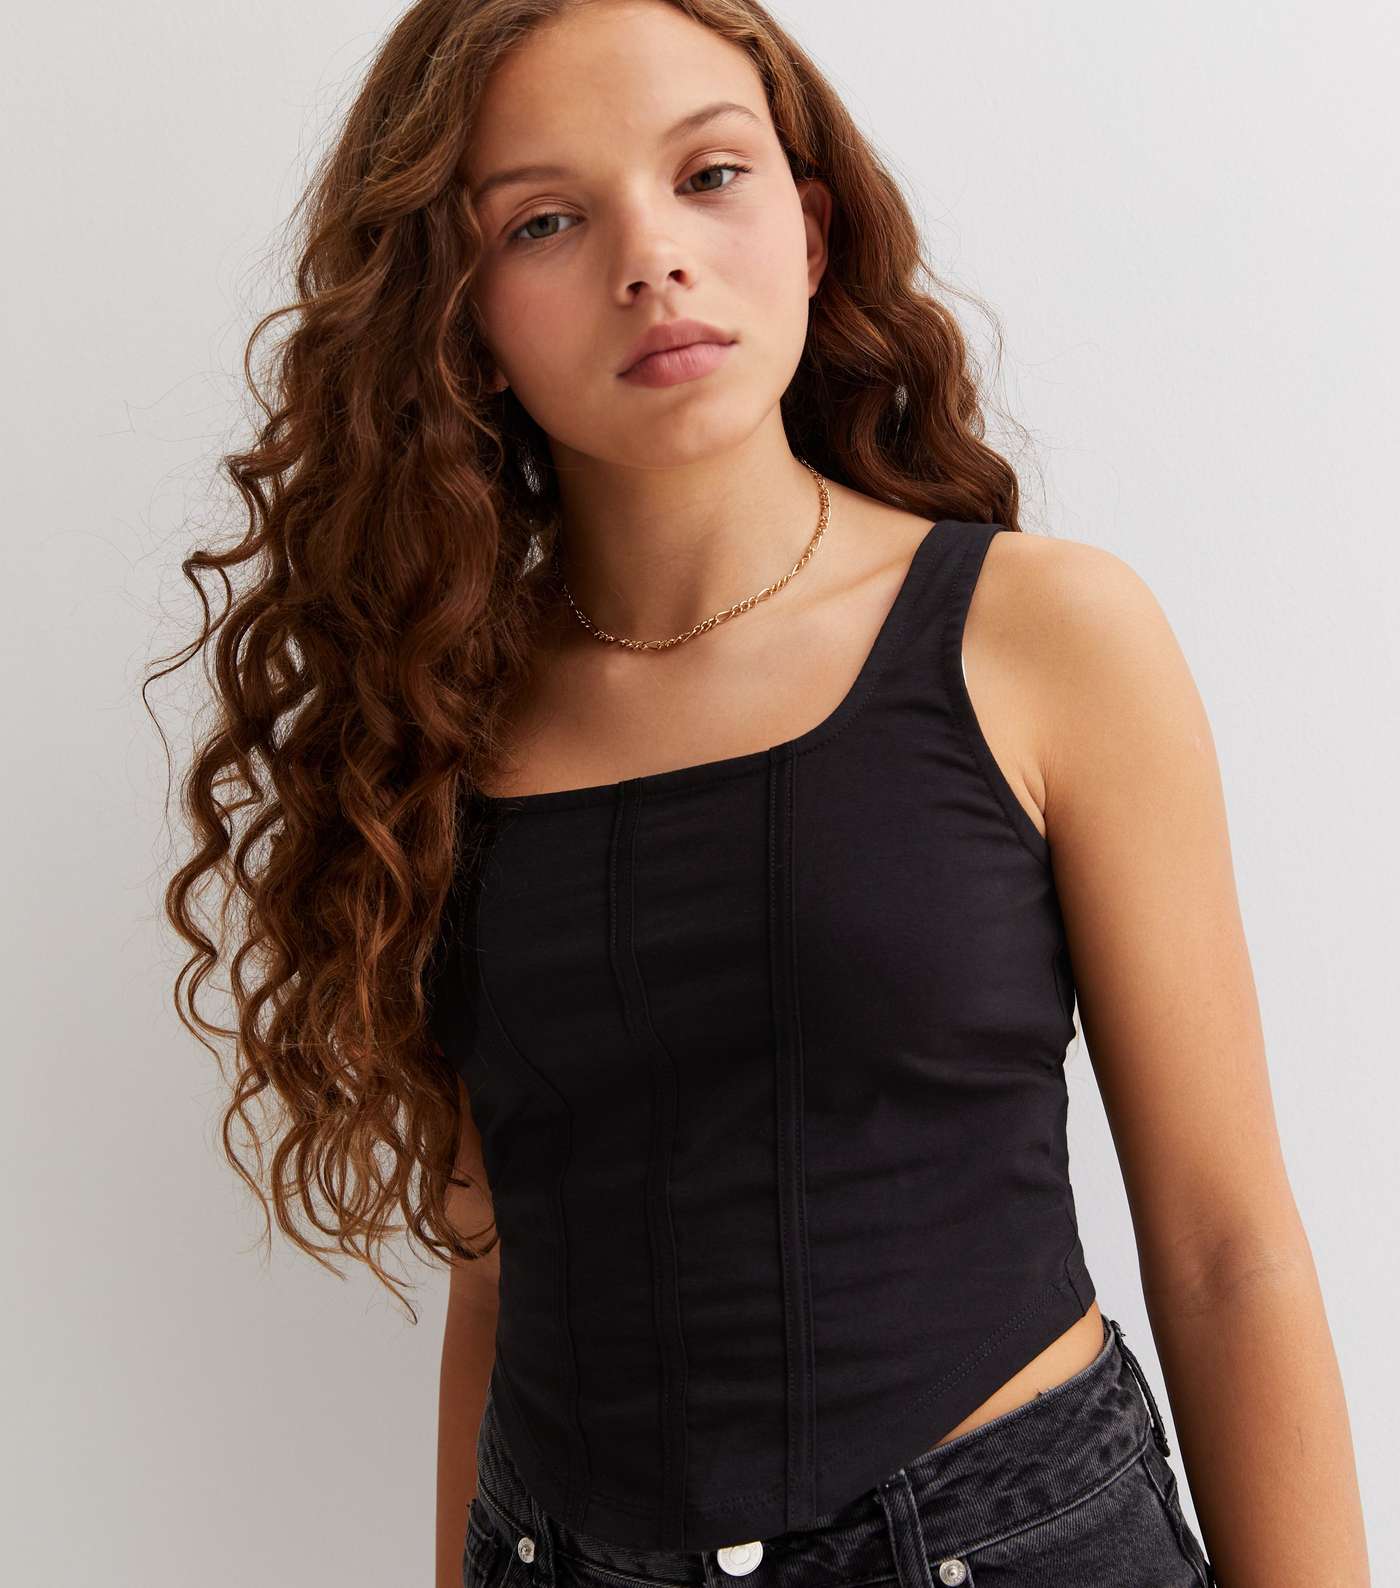 https://media2.newlookassets.com/i/newlook/850571401M1/girls/clothing/tops/girls-black-corset-top.jpg?strip=true&w=1400&qlt=60&fmt=jpeg